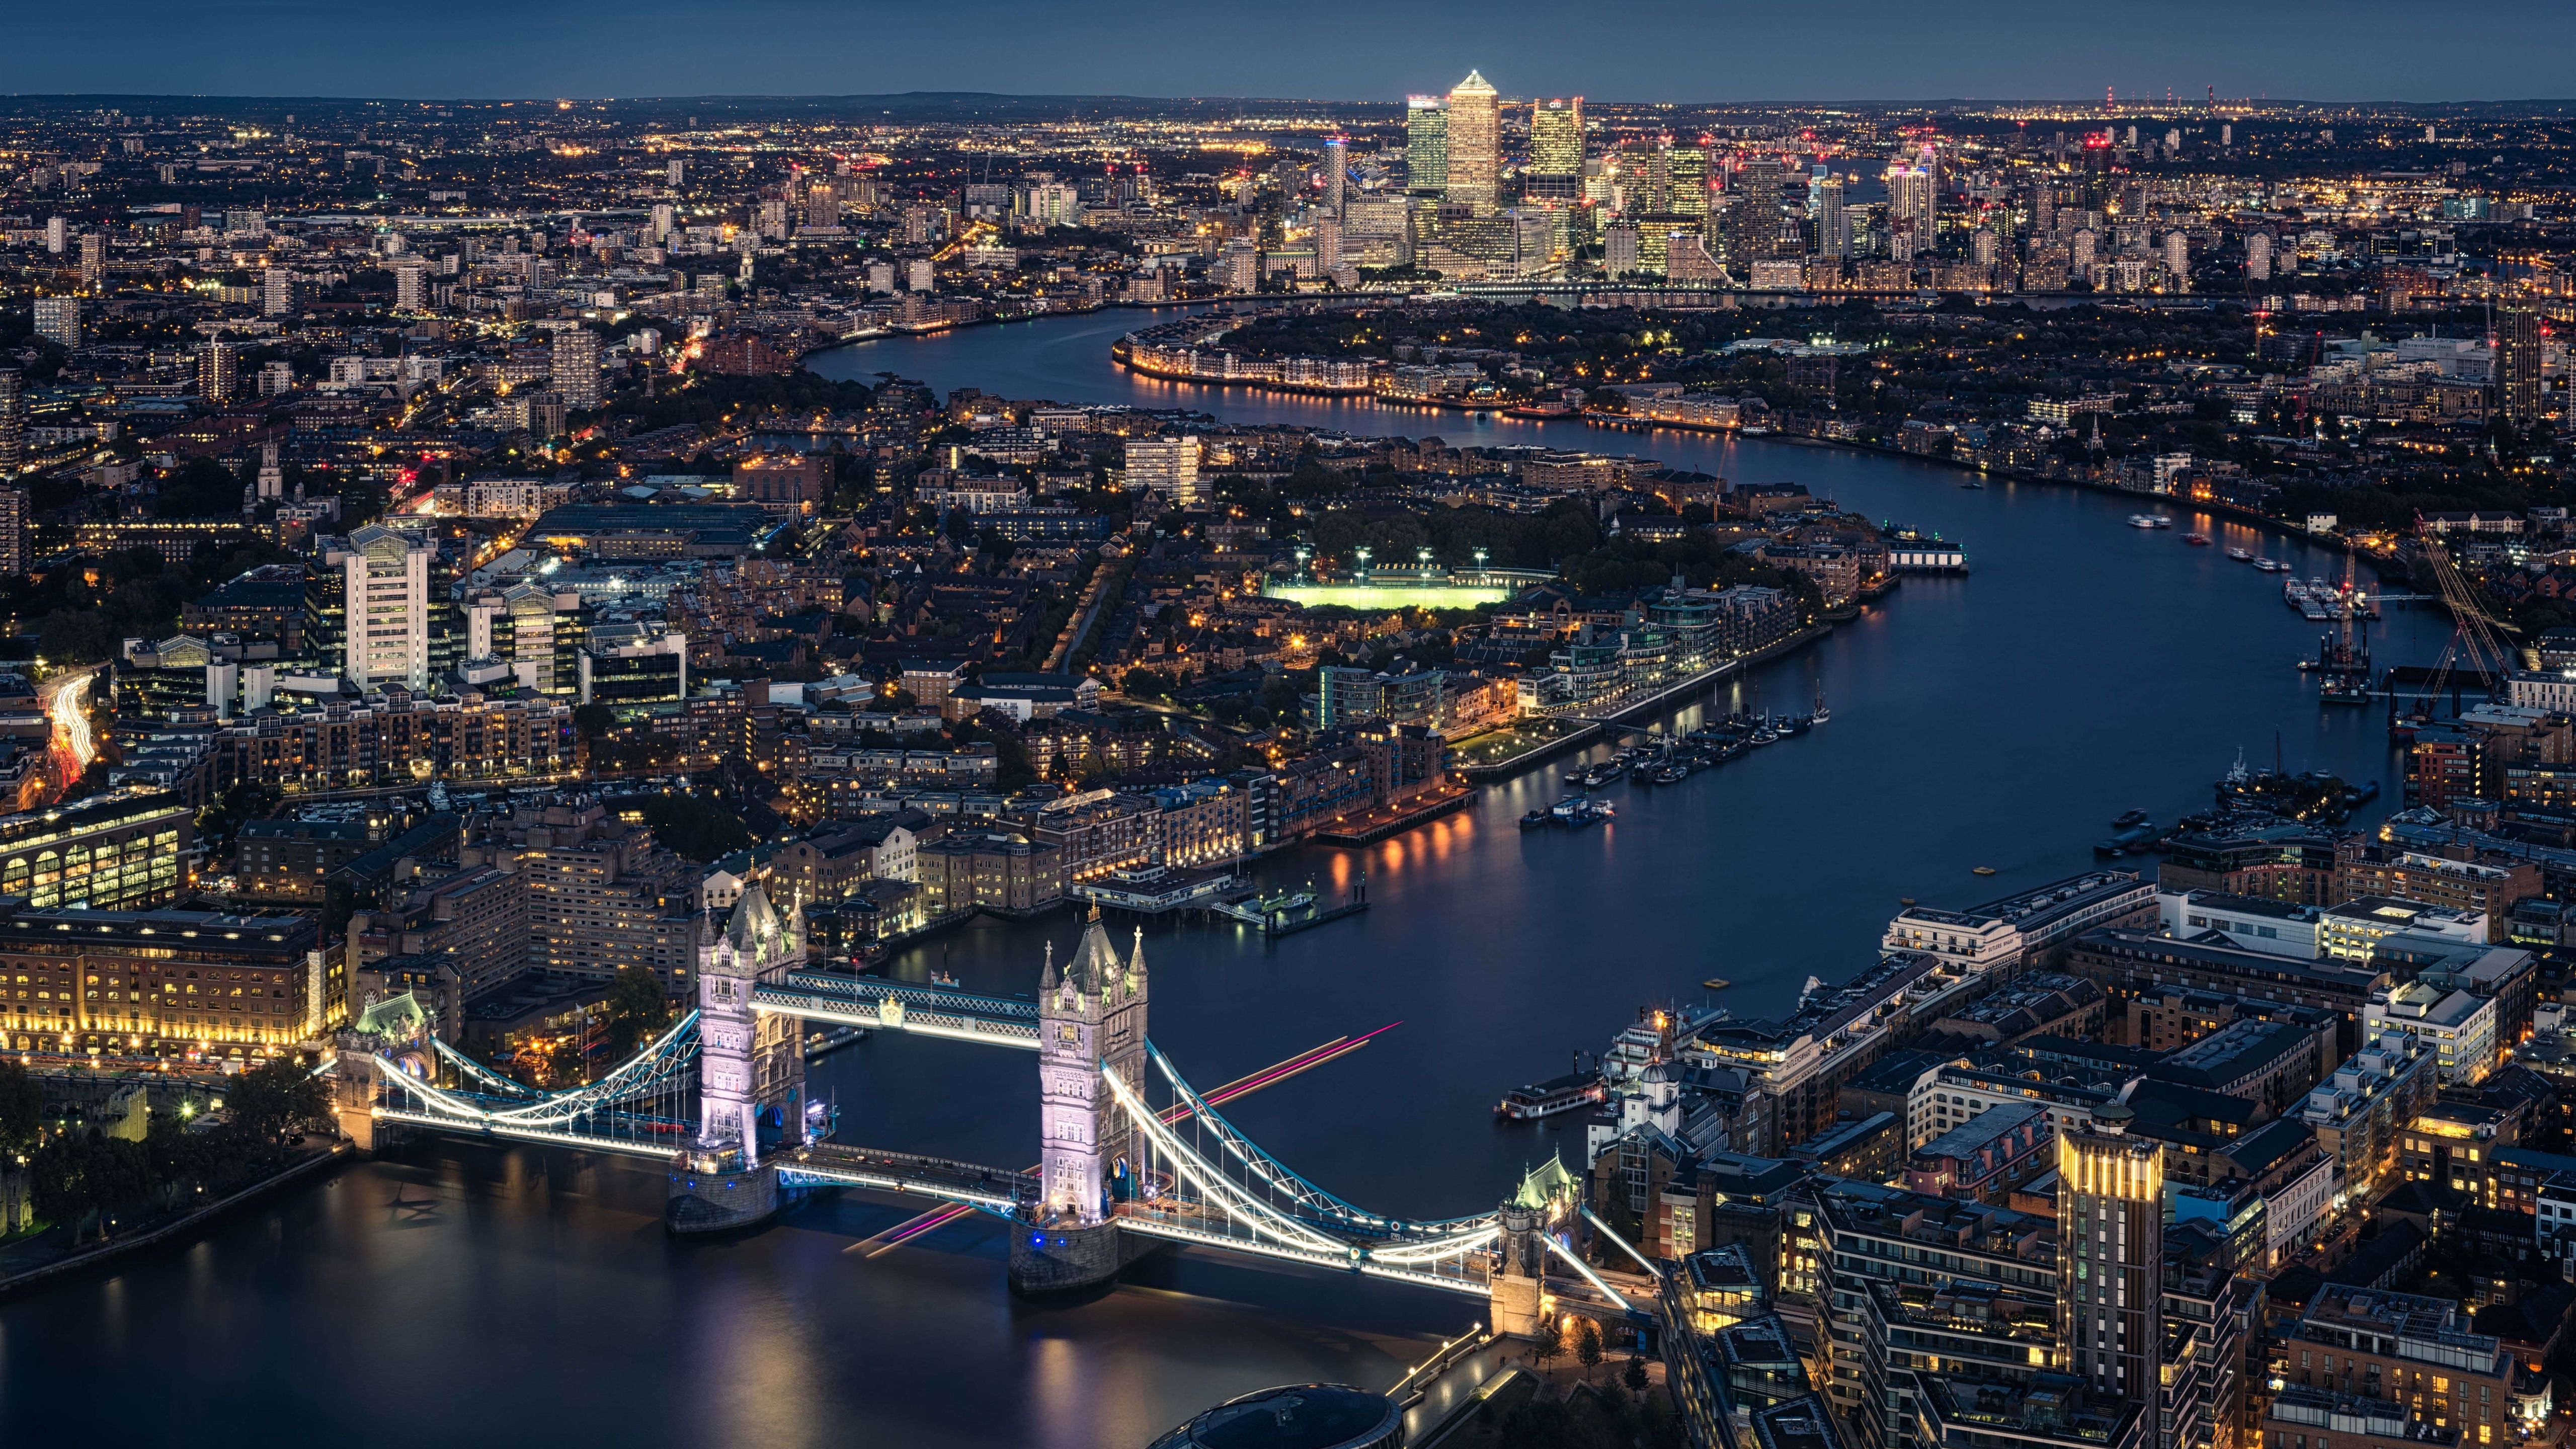 Wallpaper London, England, Thames River, Tower Bridge, city night, lights 5120x2880 UHD 5K Picture, Image